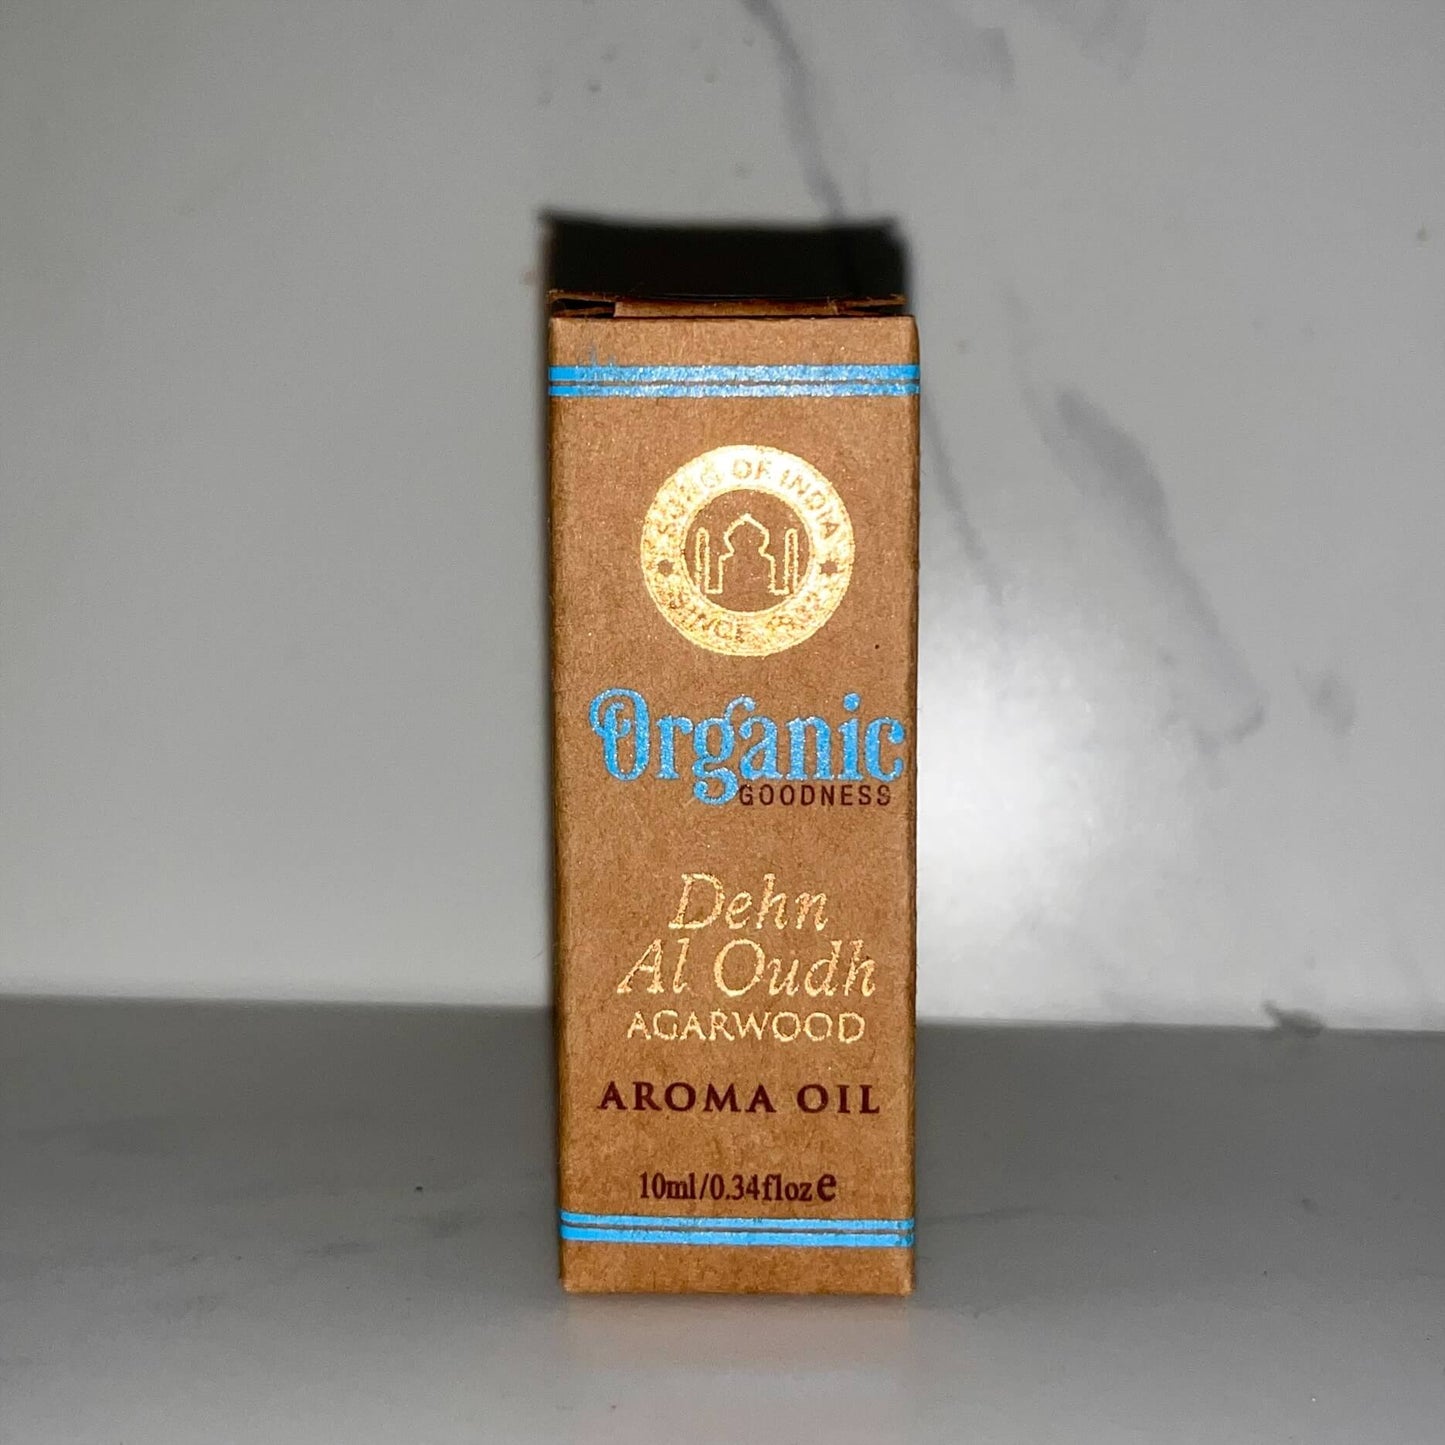 Organic Goodness Burner Aroma Oil Dehn Al Oudh AGARWOOD